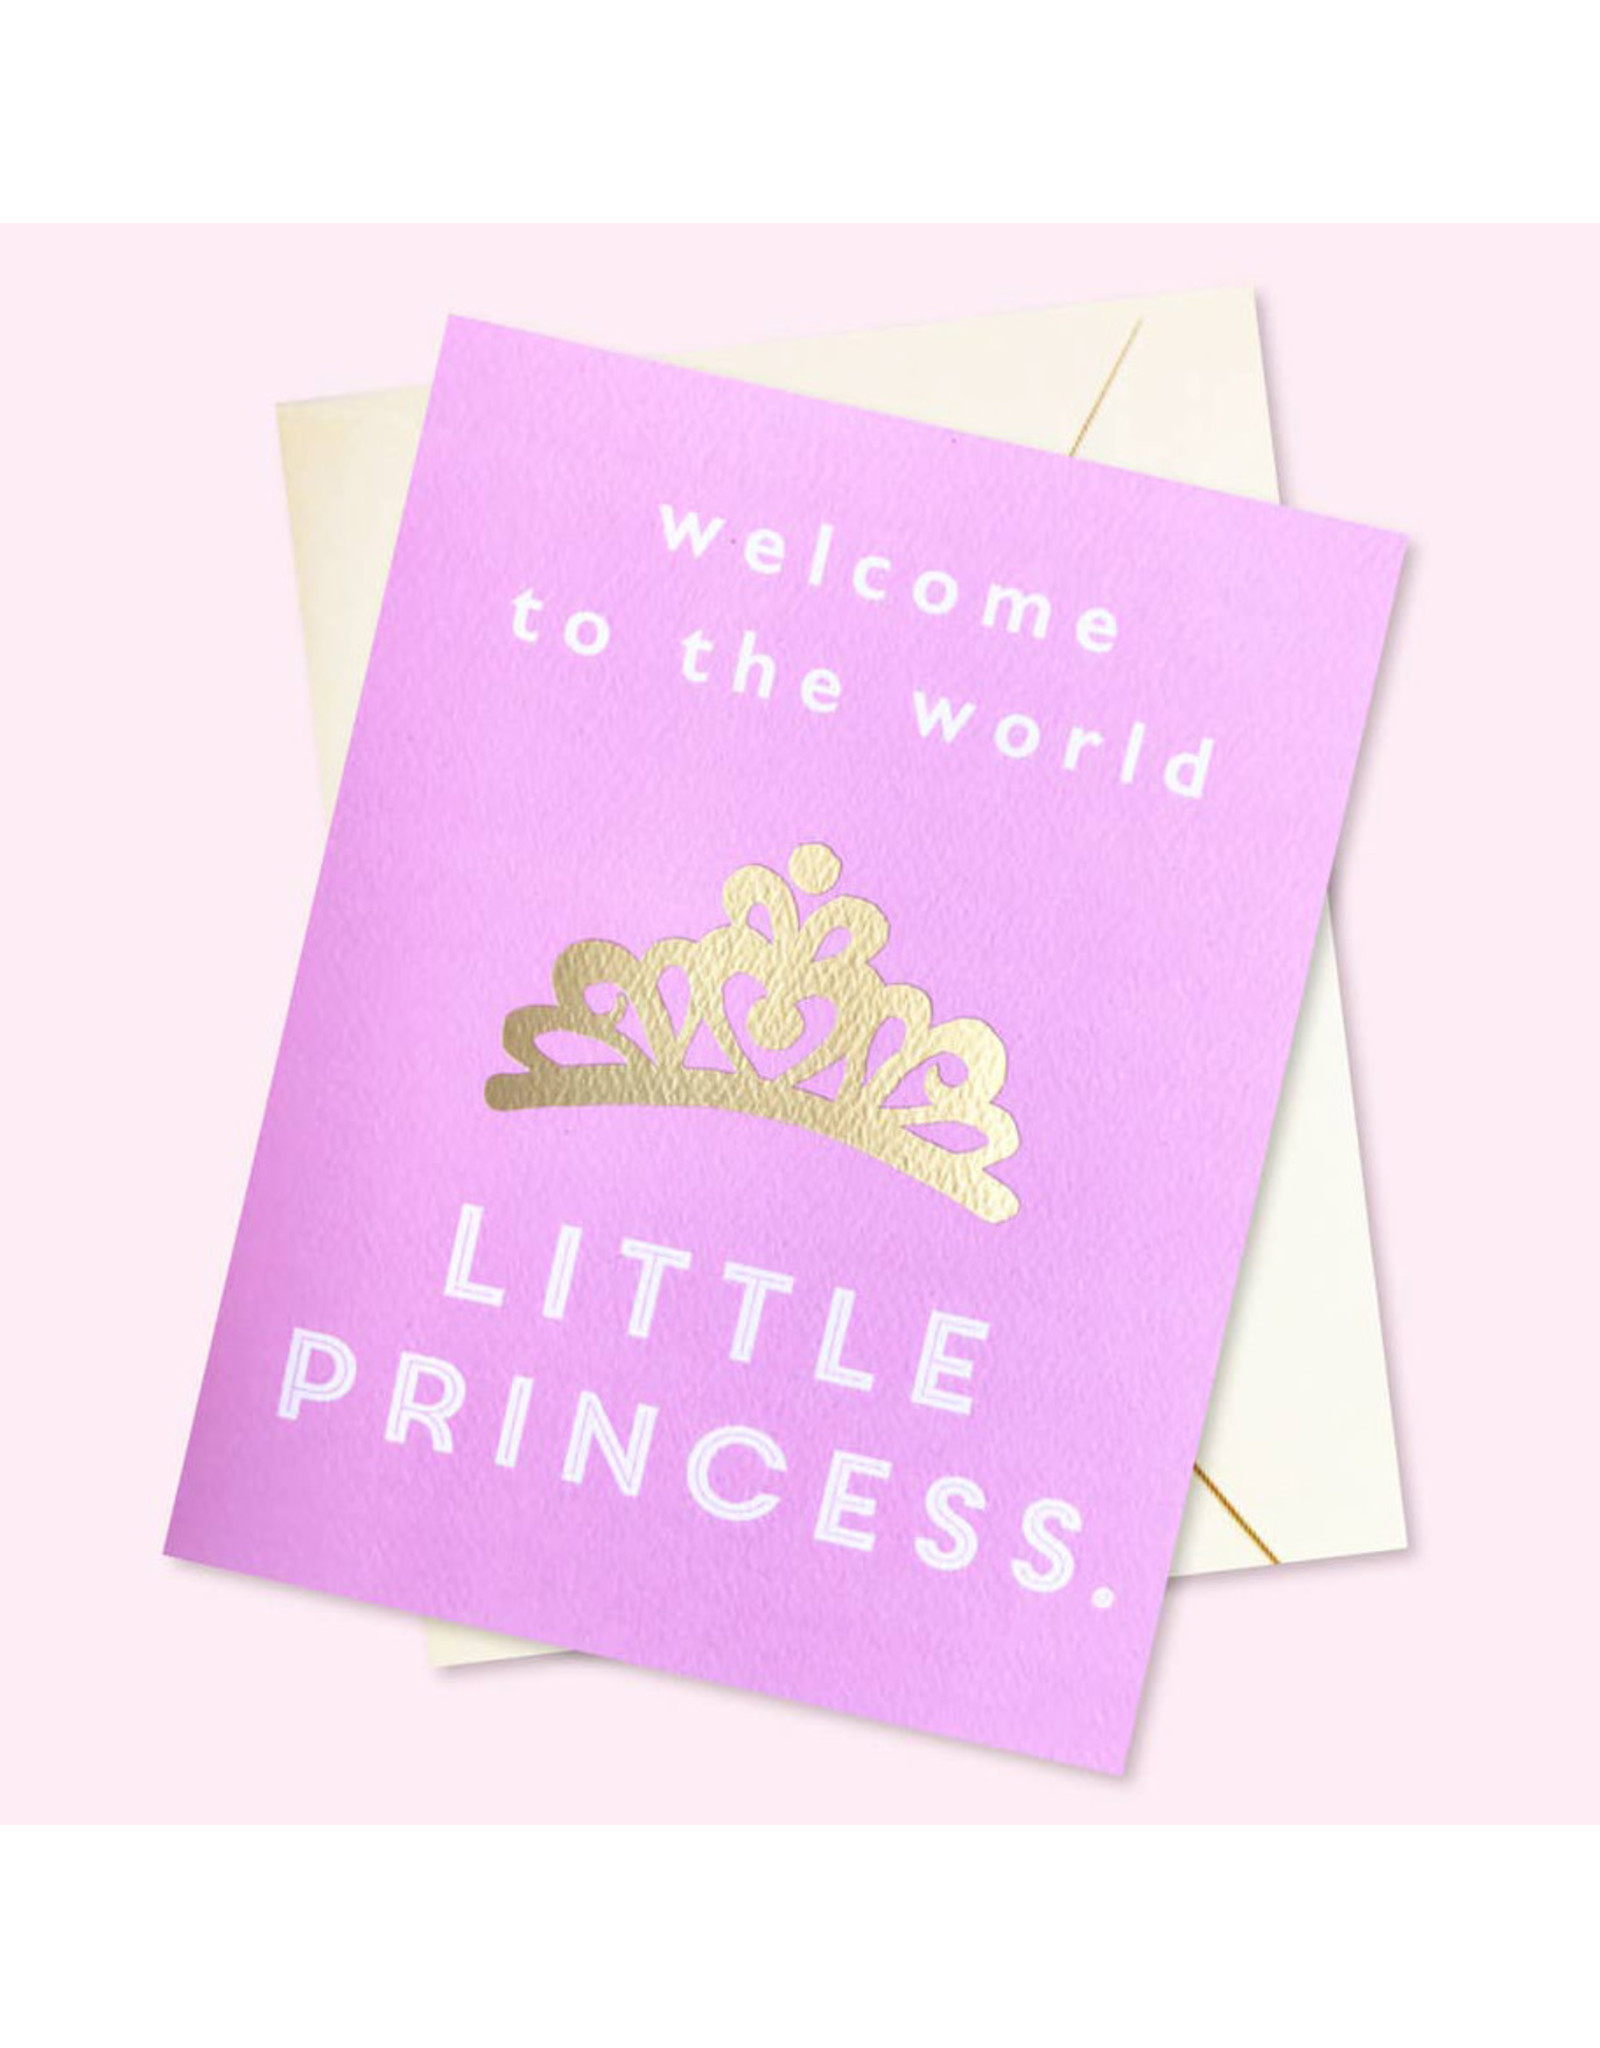 J. Falkner Cards Baby Princess A2 Card